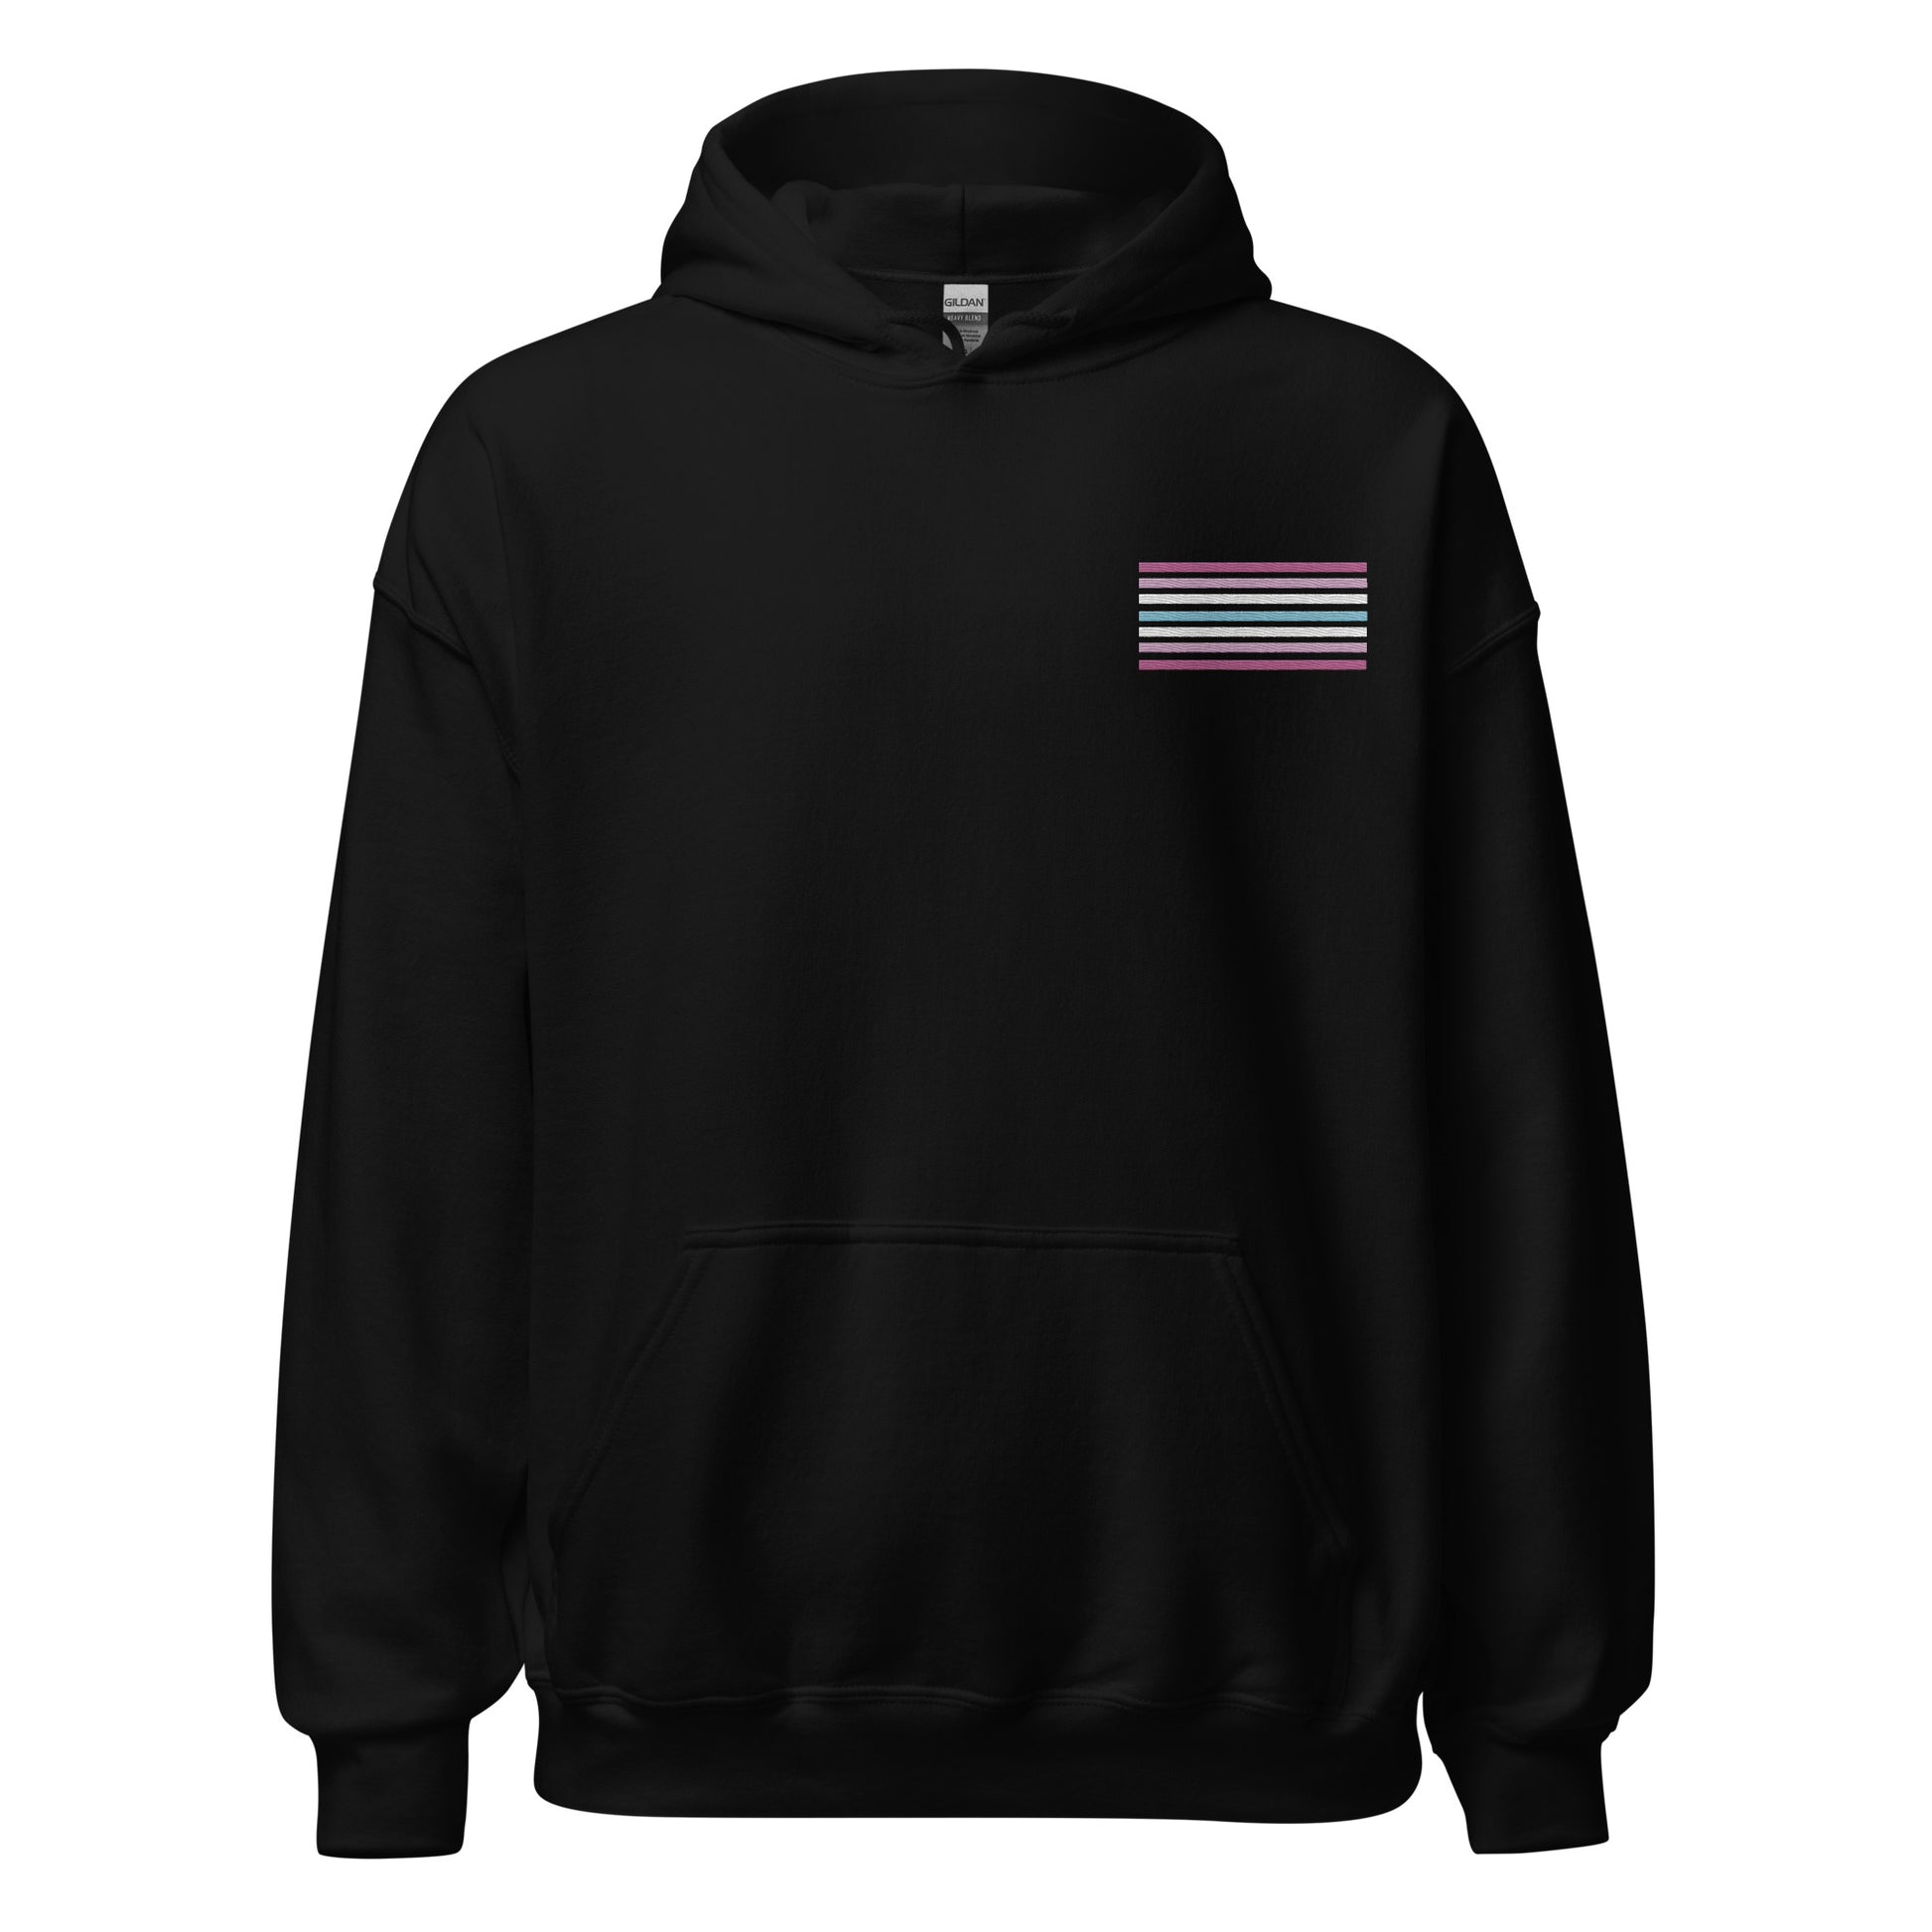 femboy hoodie, subtle femboi pride flag embroidered pocket design hooded sweatshirt, hang